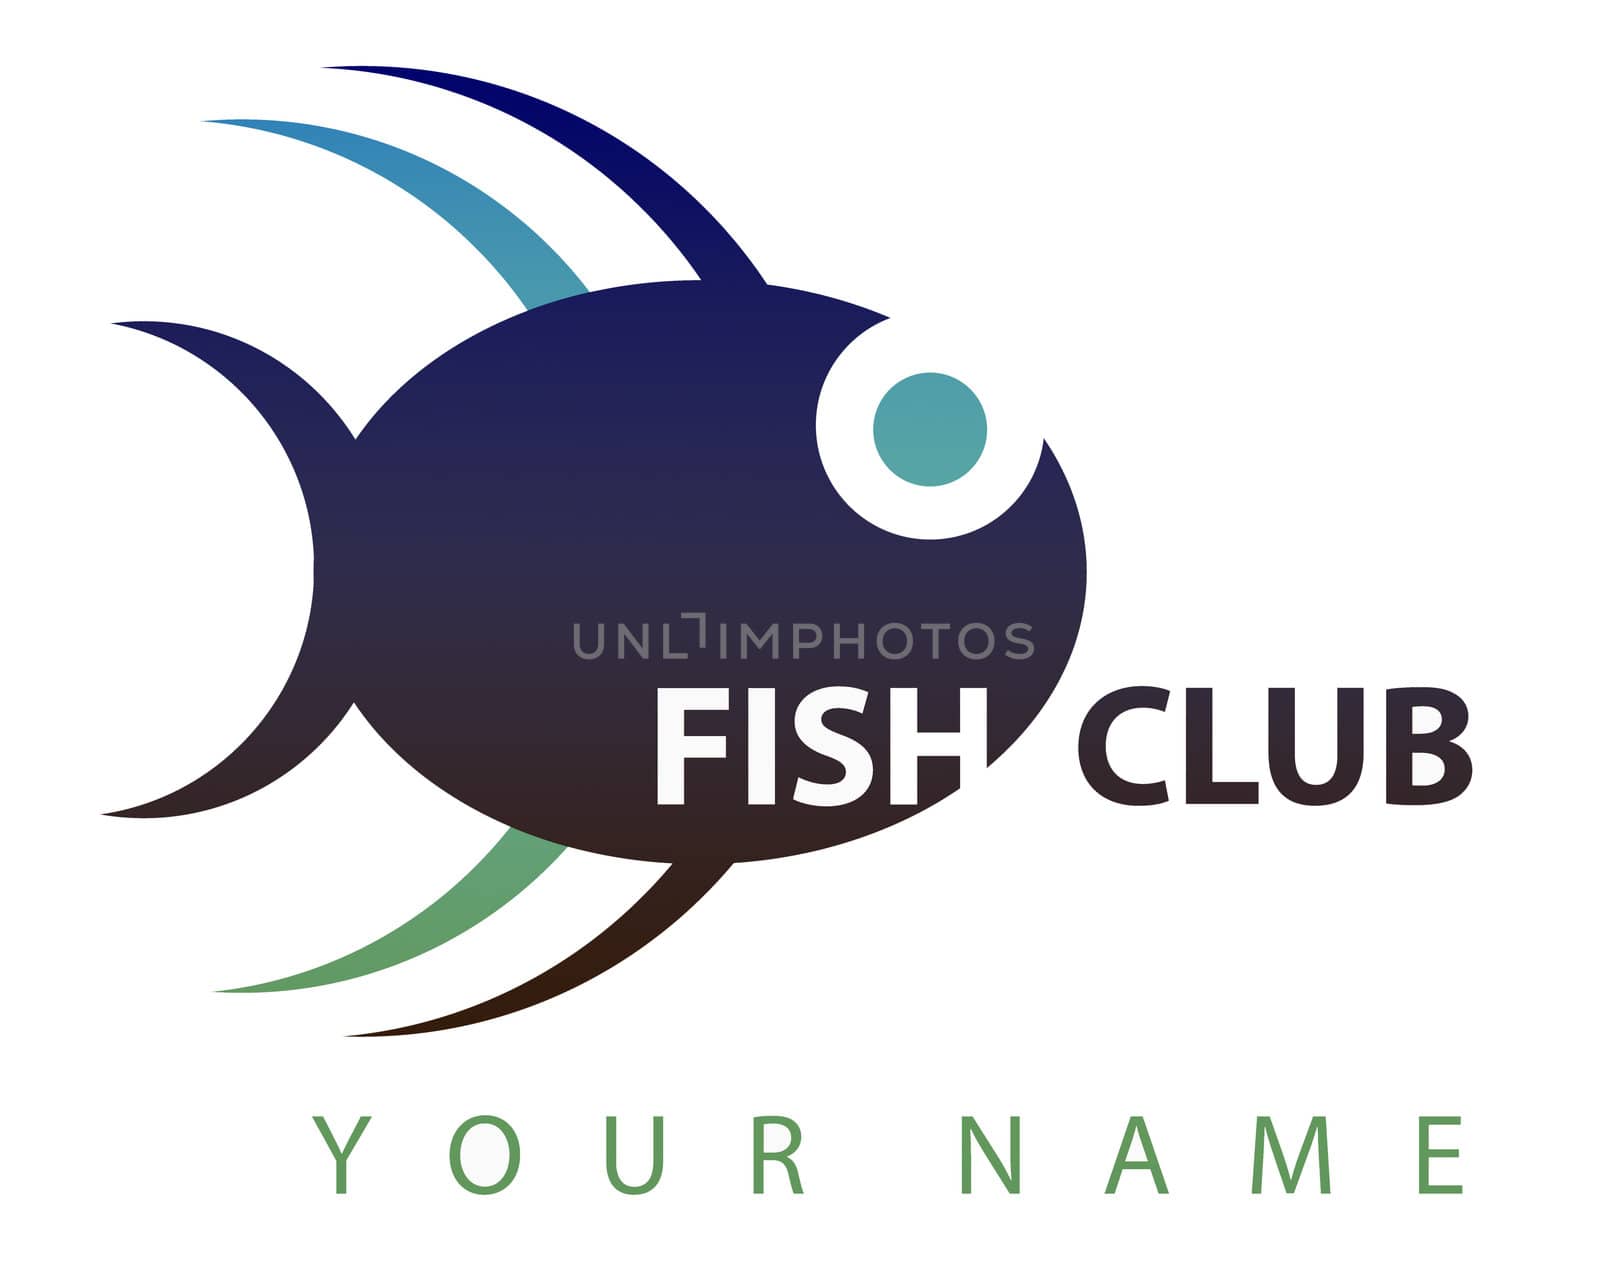 Business logo: Fish club by landon